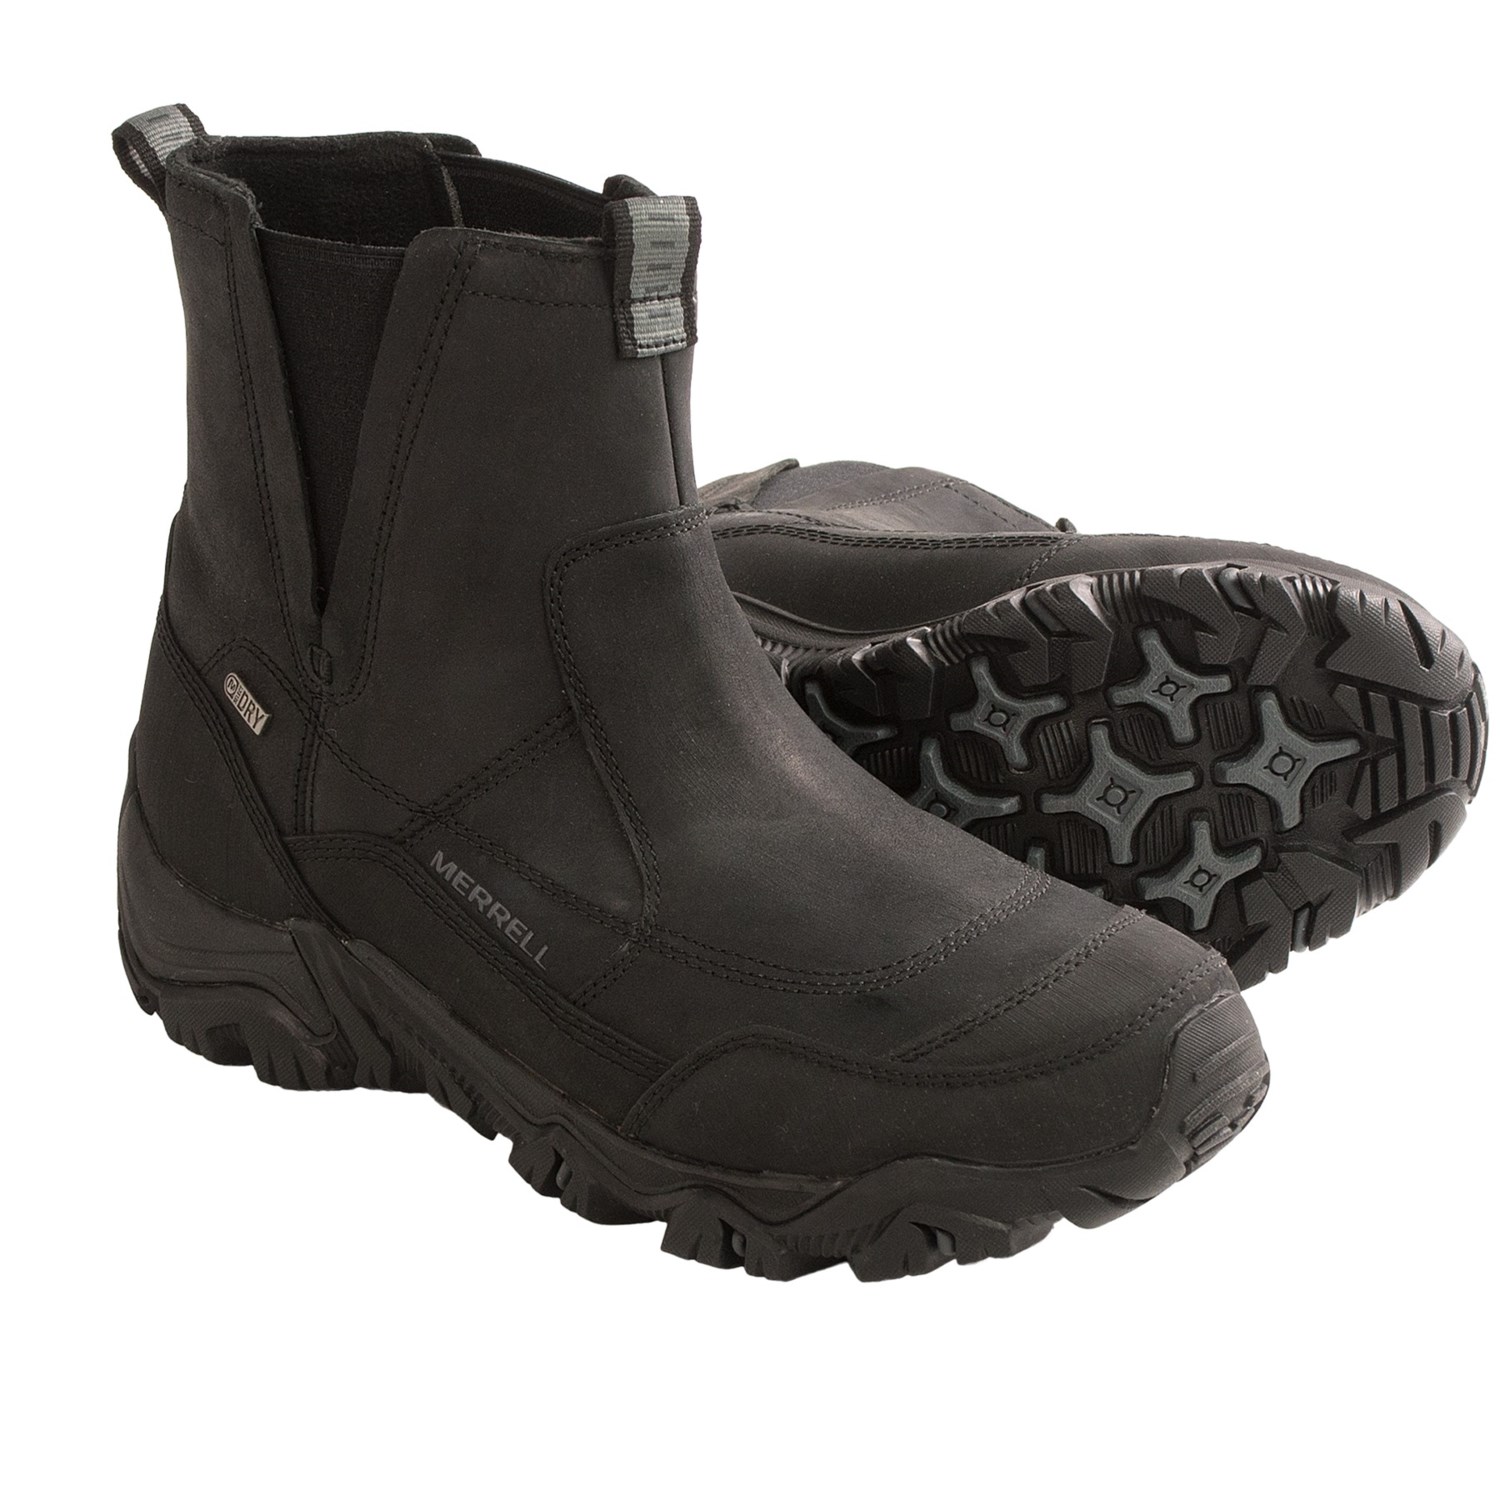 Merrell Polarand Rove Pull Snow Boots (For Men) - Save 25%